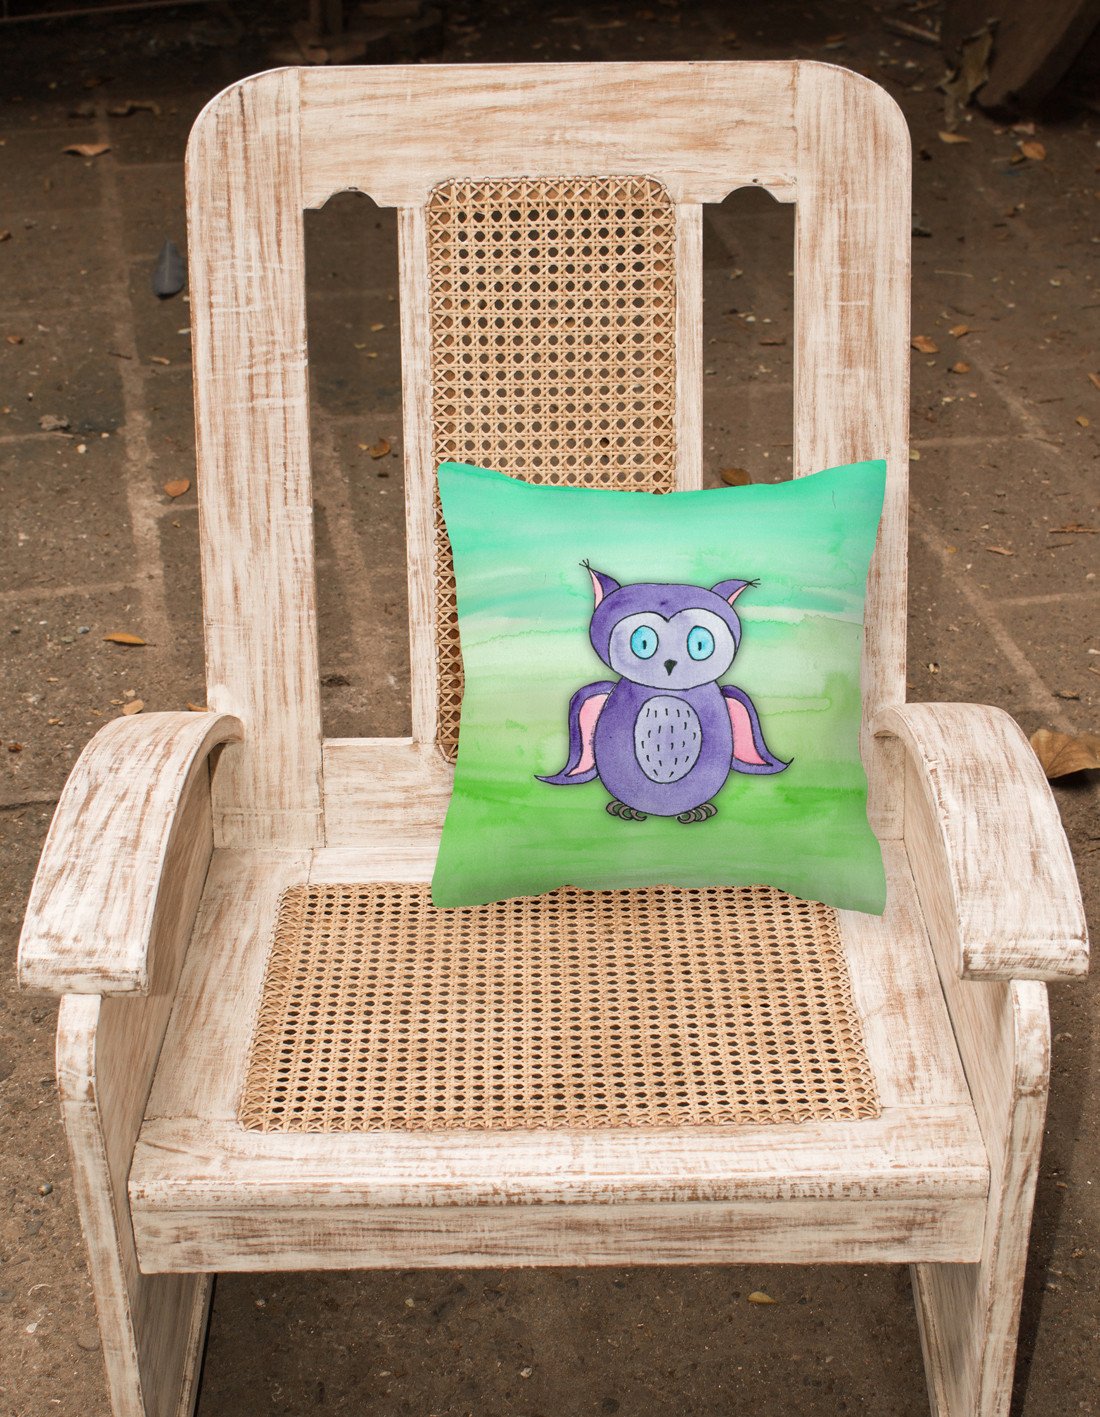 Purple Owl Watercolor Fabric Decorative Pillow BB7429PW1818 by Caroline's Treasures